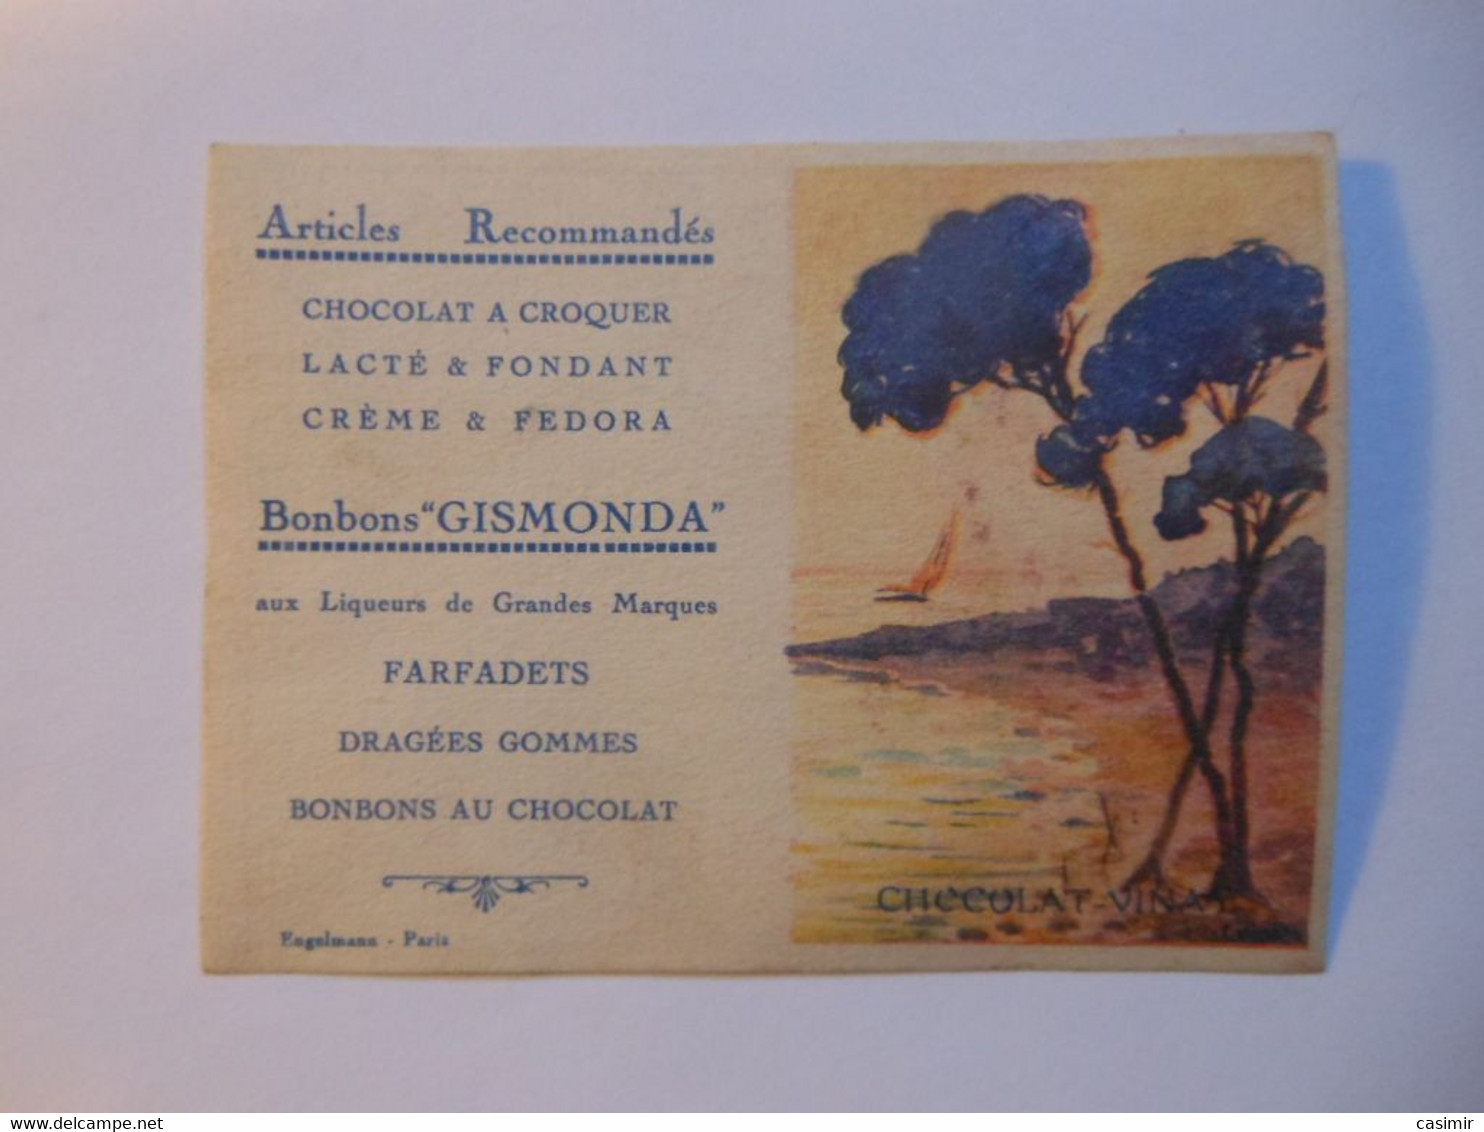 B0099f - Image Chromo CHOCOLAT VINAY - Calendrier 1927 - BONBONS GISMONDA Farfadets Dragées - Chocolat